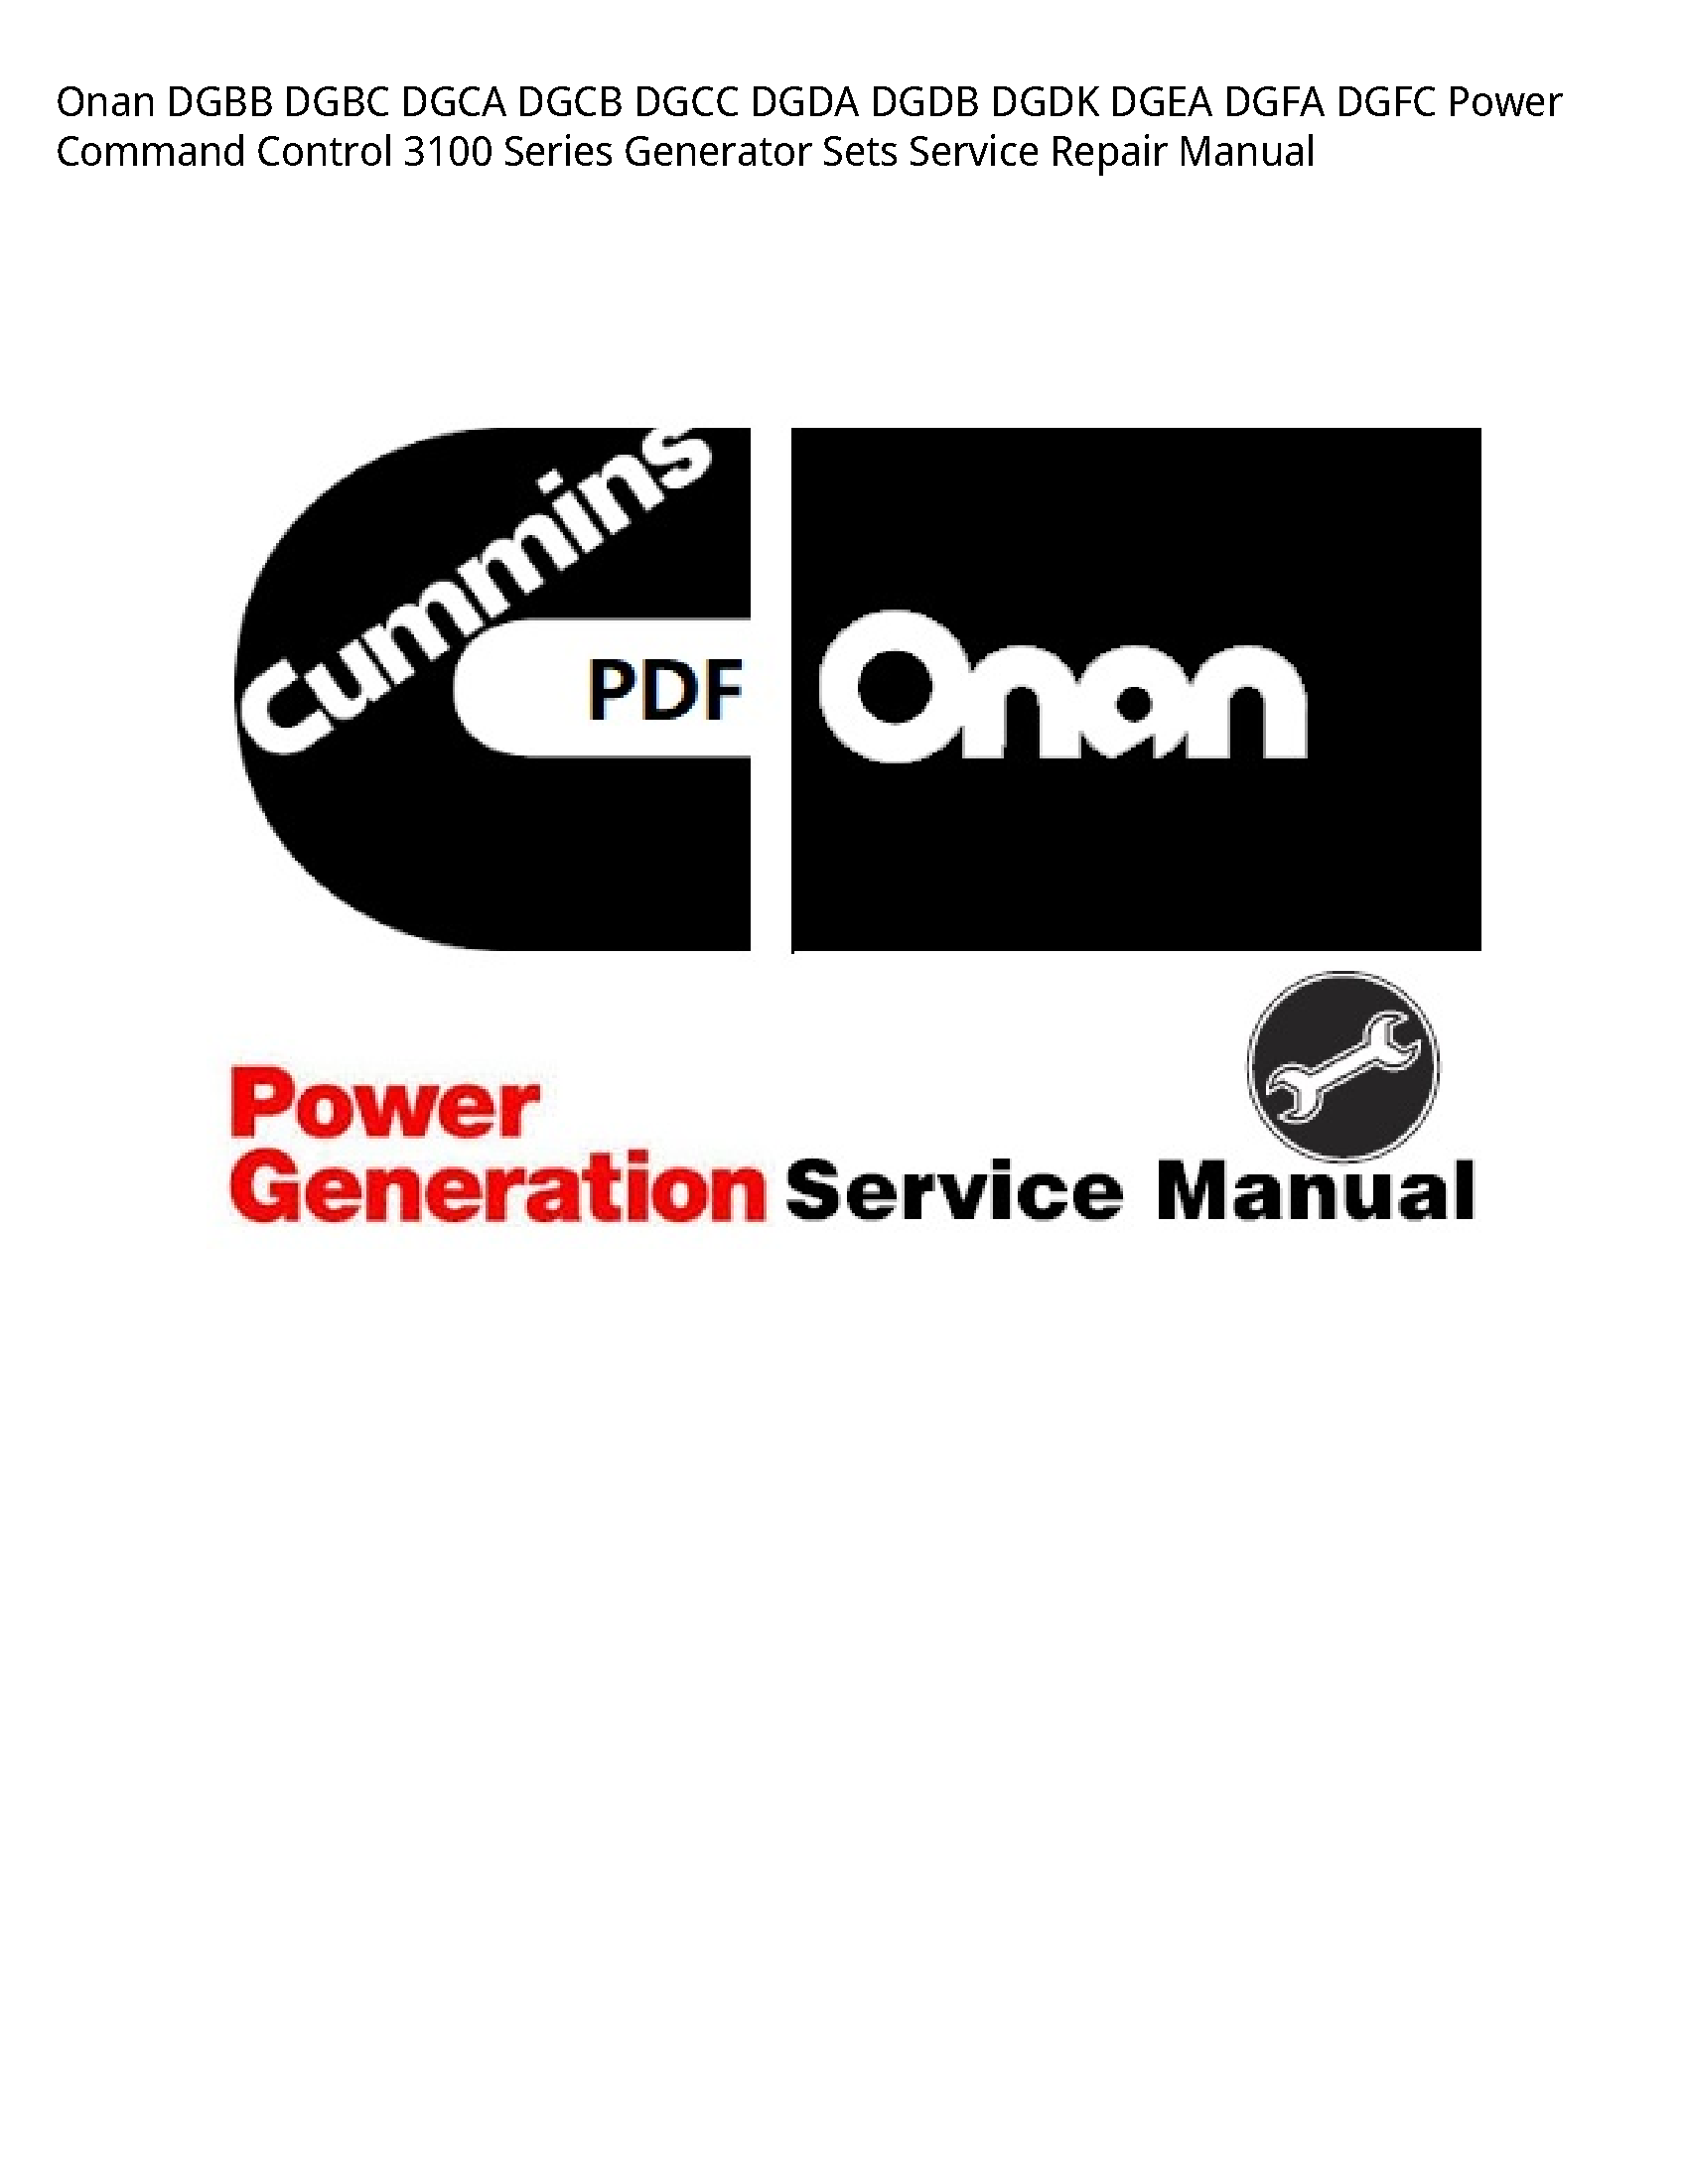 Onan 3100 DGBB DGBC DGCA DGCB DGCC DGDA DGDB DGDK DGEA DGFA DGFC Power Command Control Series Generator Sets manual